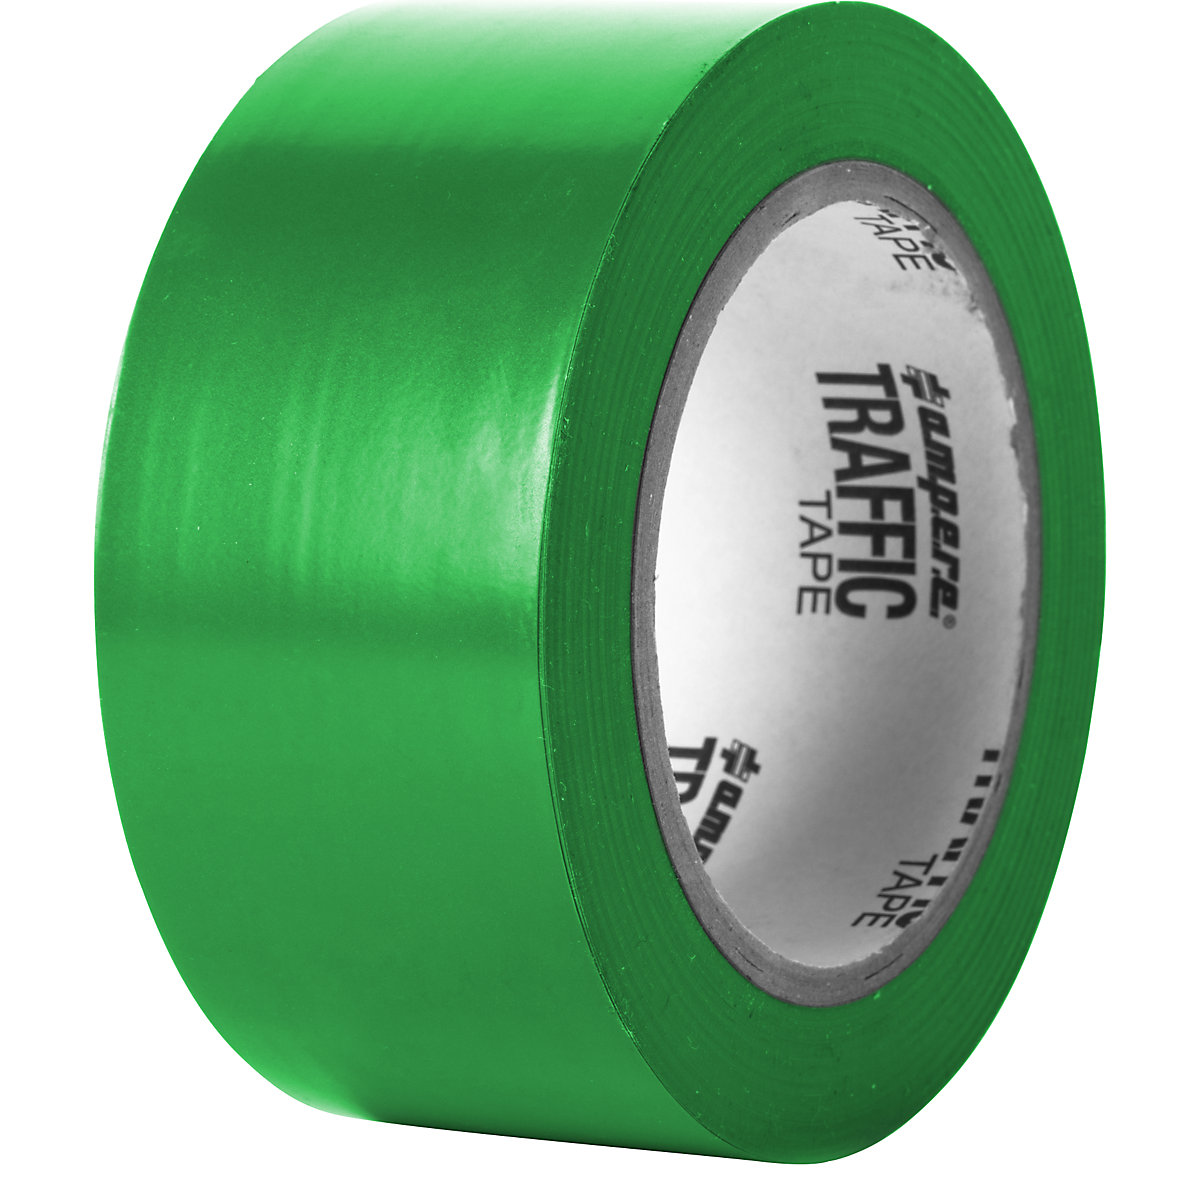 Podlahová označovacia páska – Ampere, šírka 50 mm, zelená-2